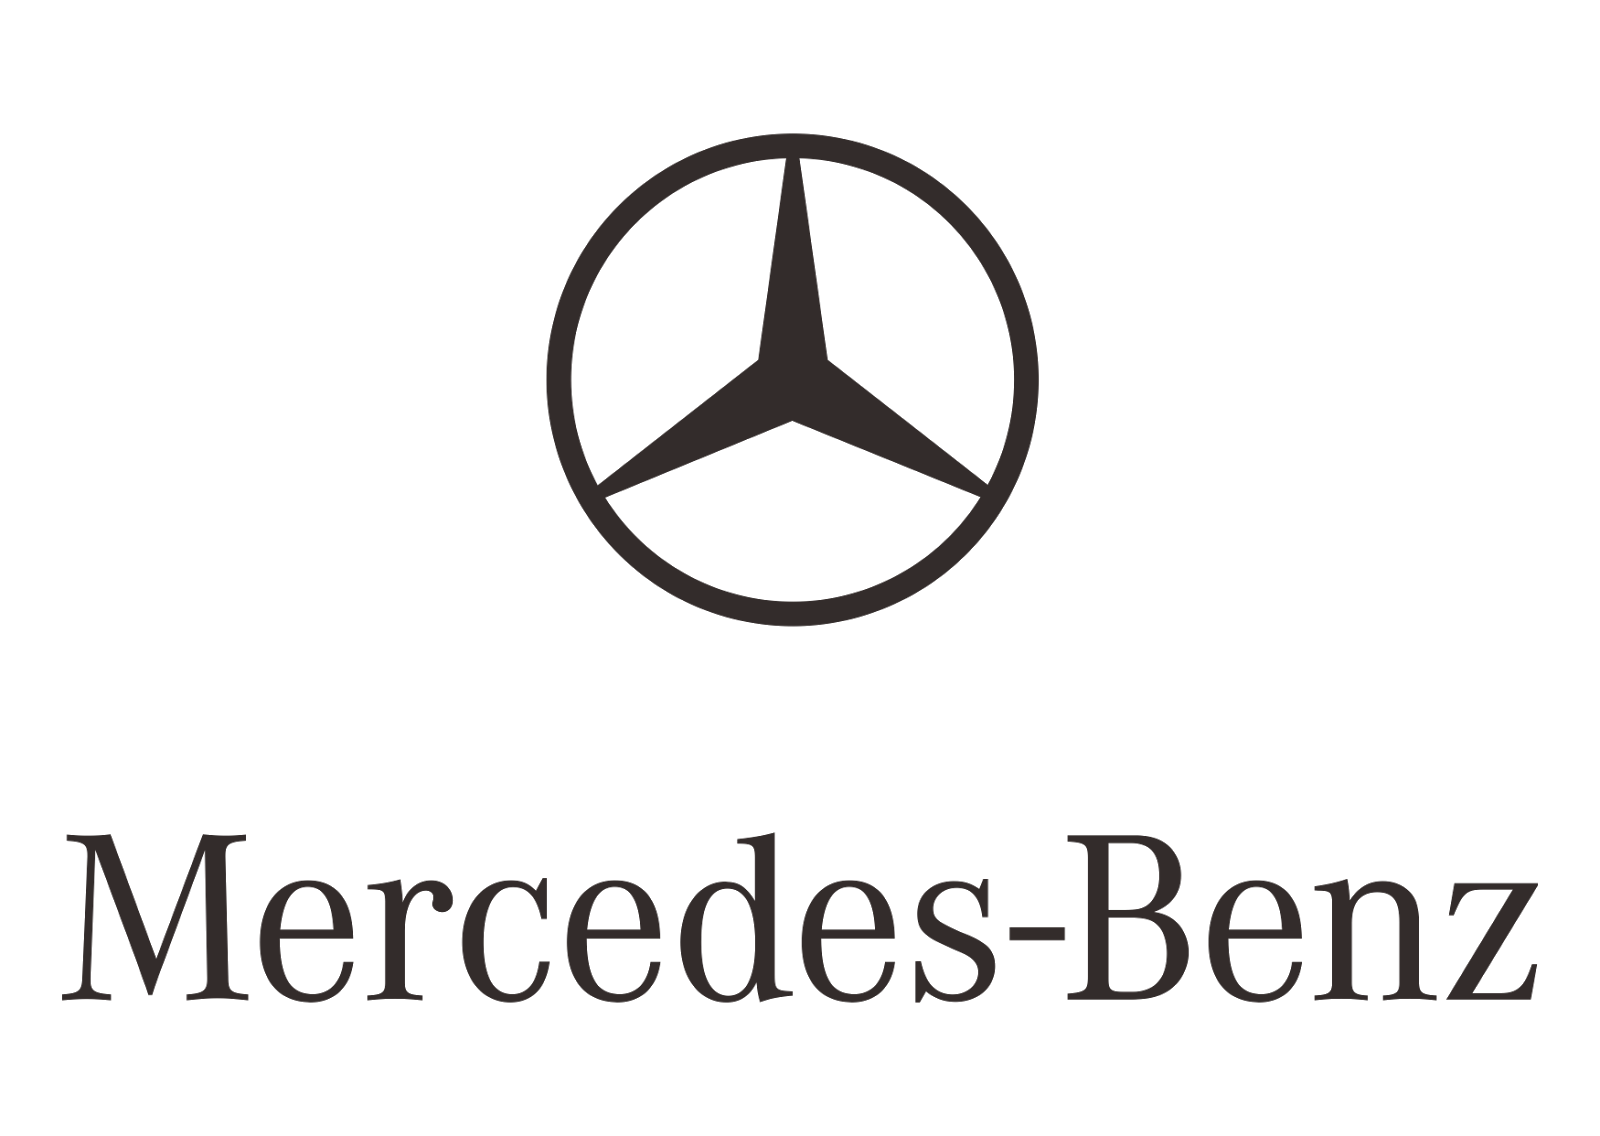 Mercedes Benz Logo Png Transparent Image - Mercedes Benz, Transparent background PNG HD thumbnail